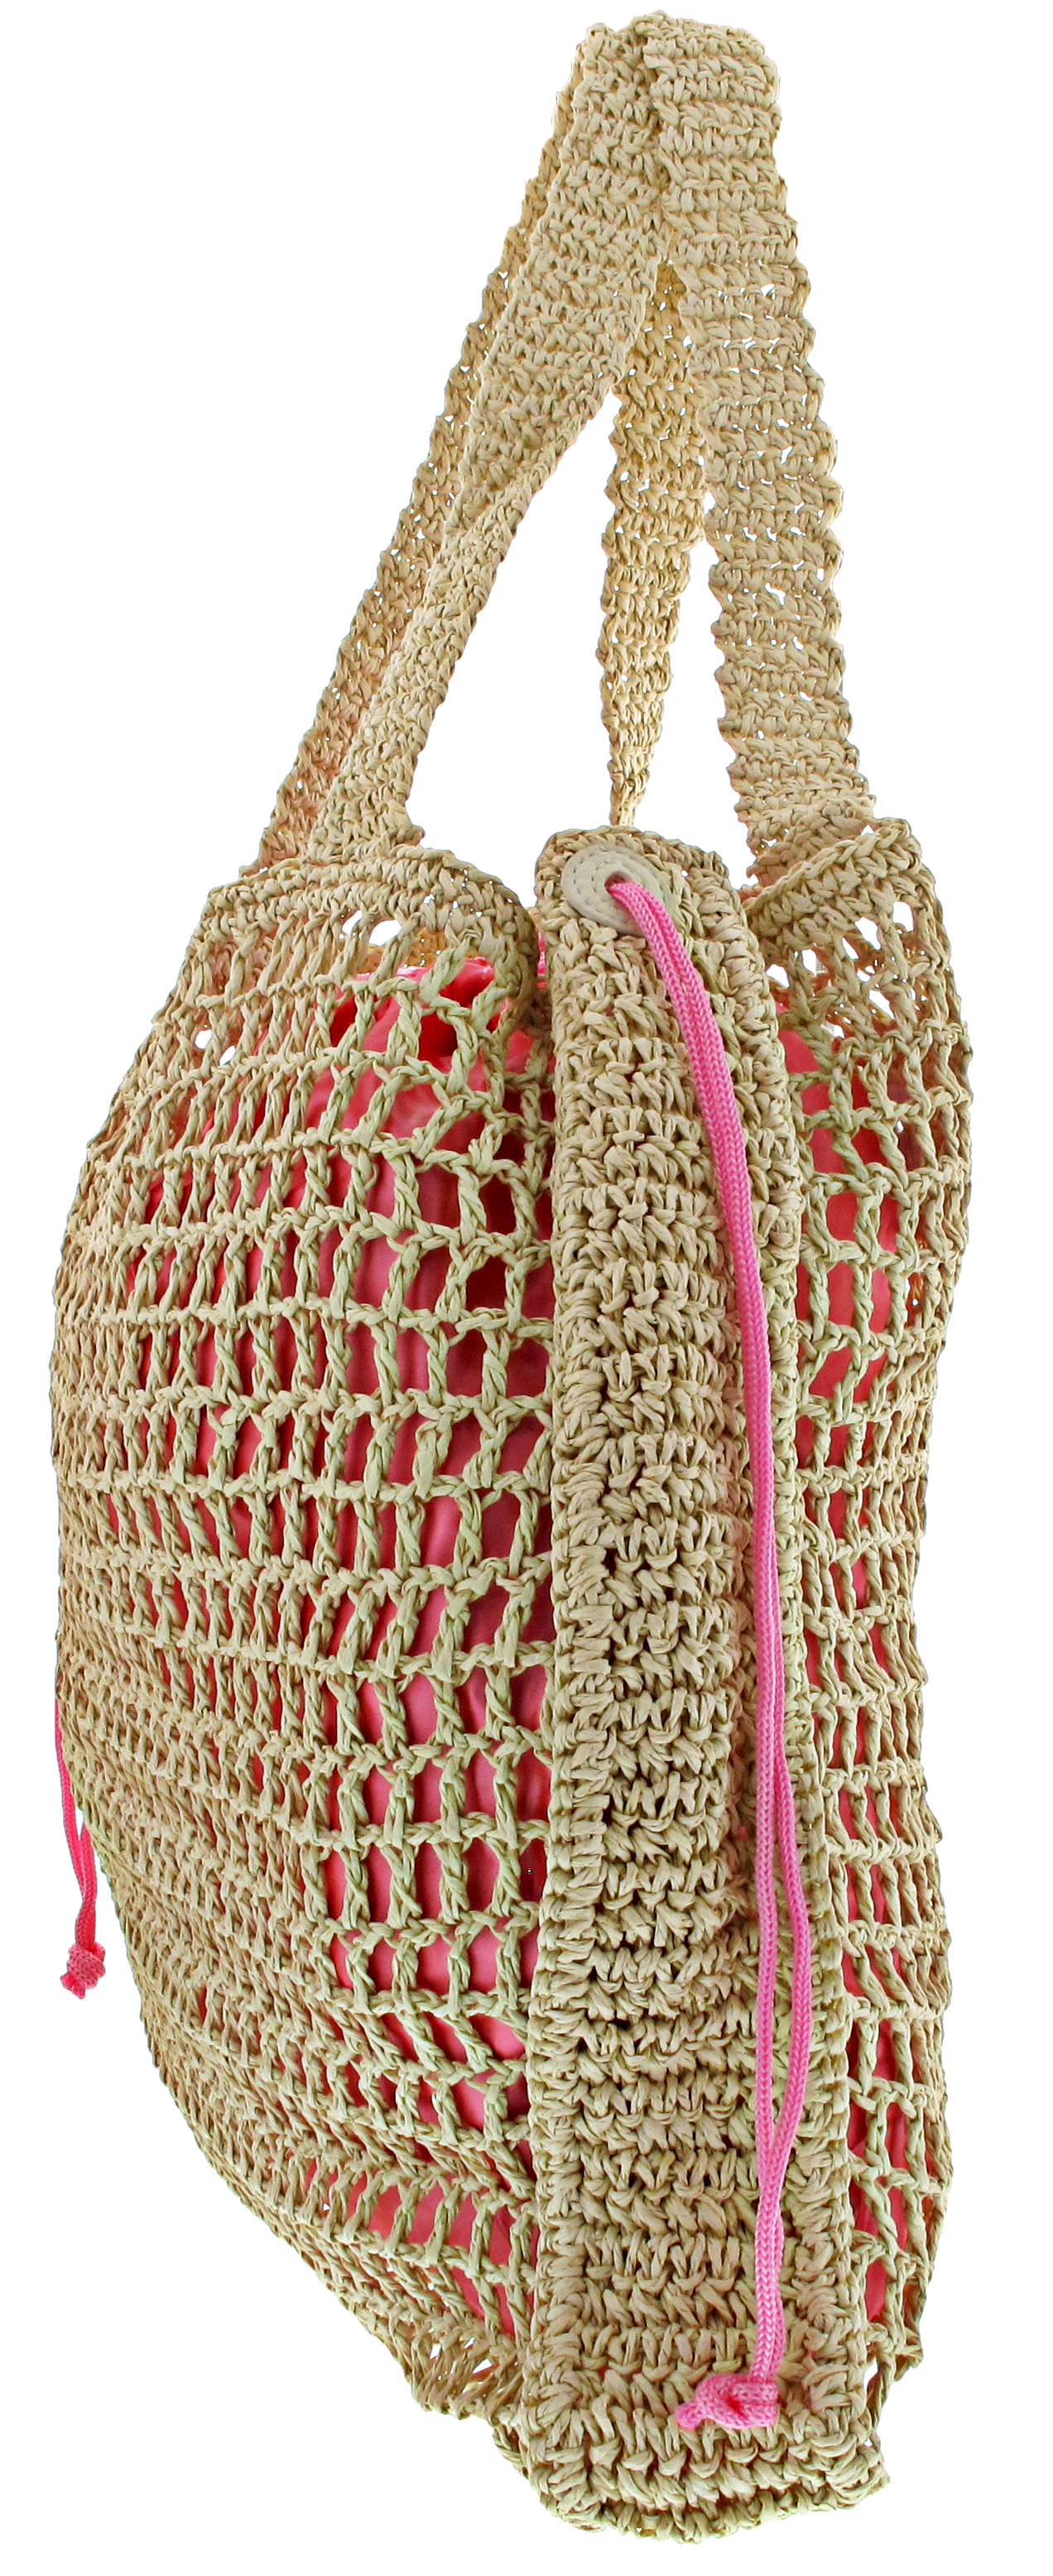 Hey Marly Crochet Bag